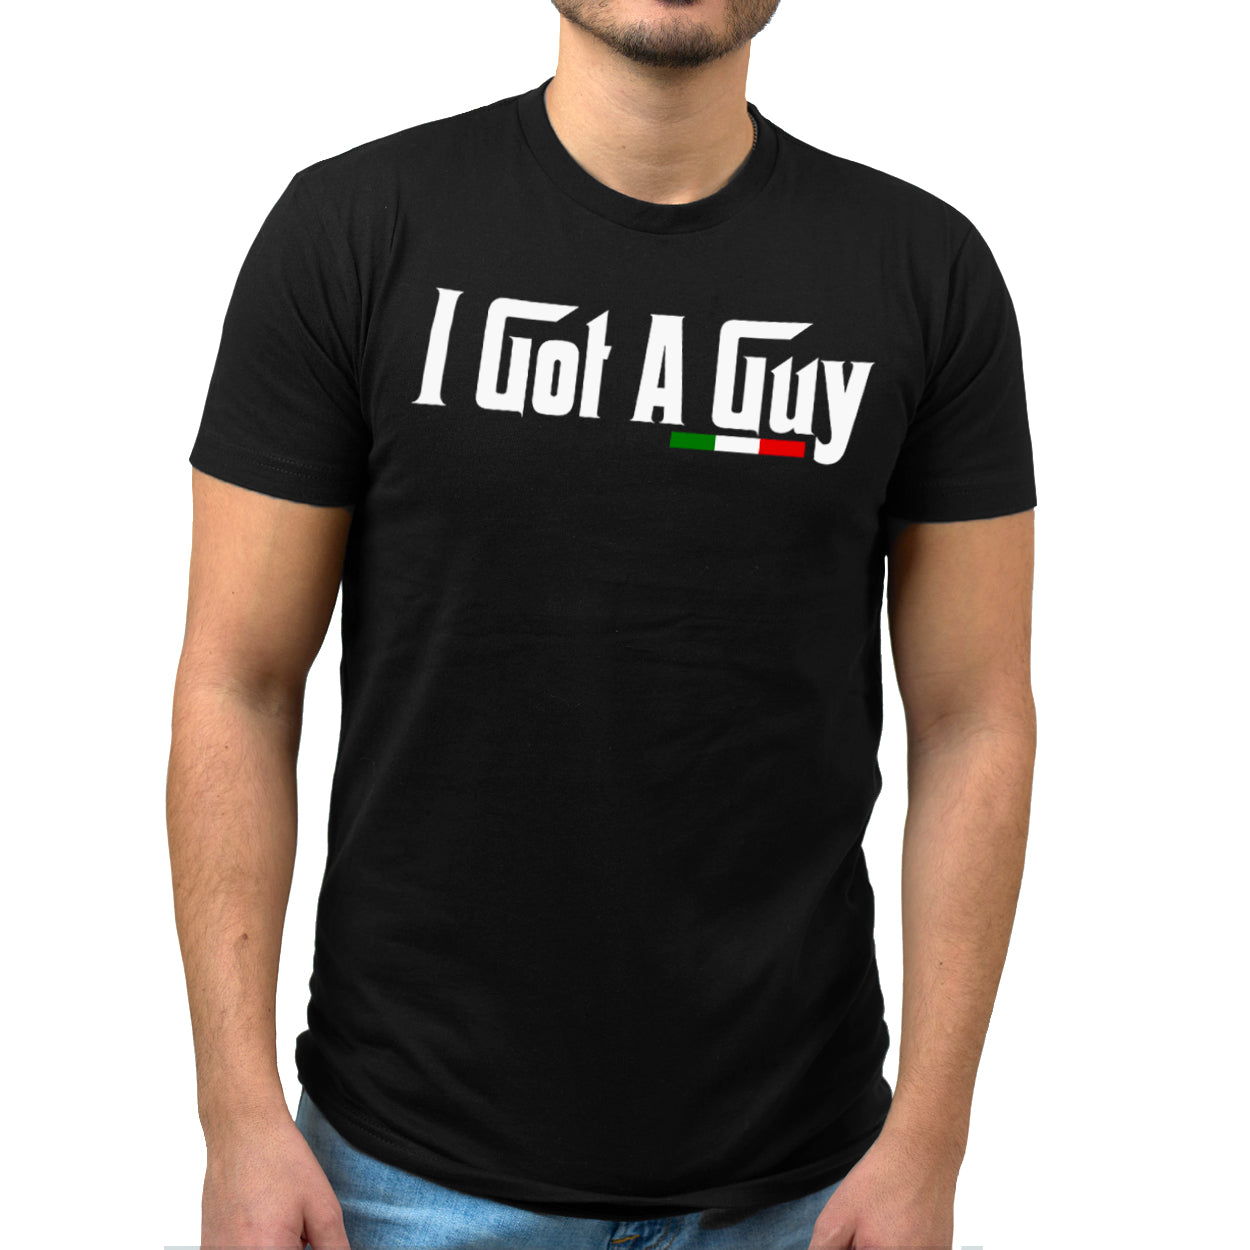 I Got A Guy Funny Italian unisex Black T-Shirt S by Hardcore Italians